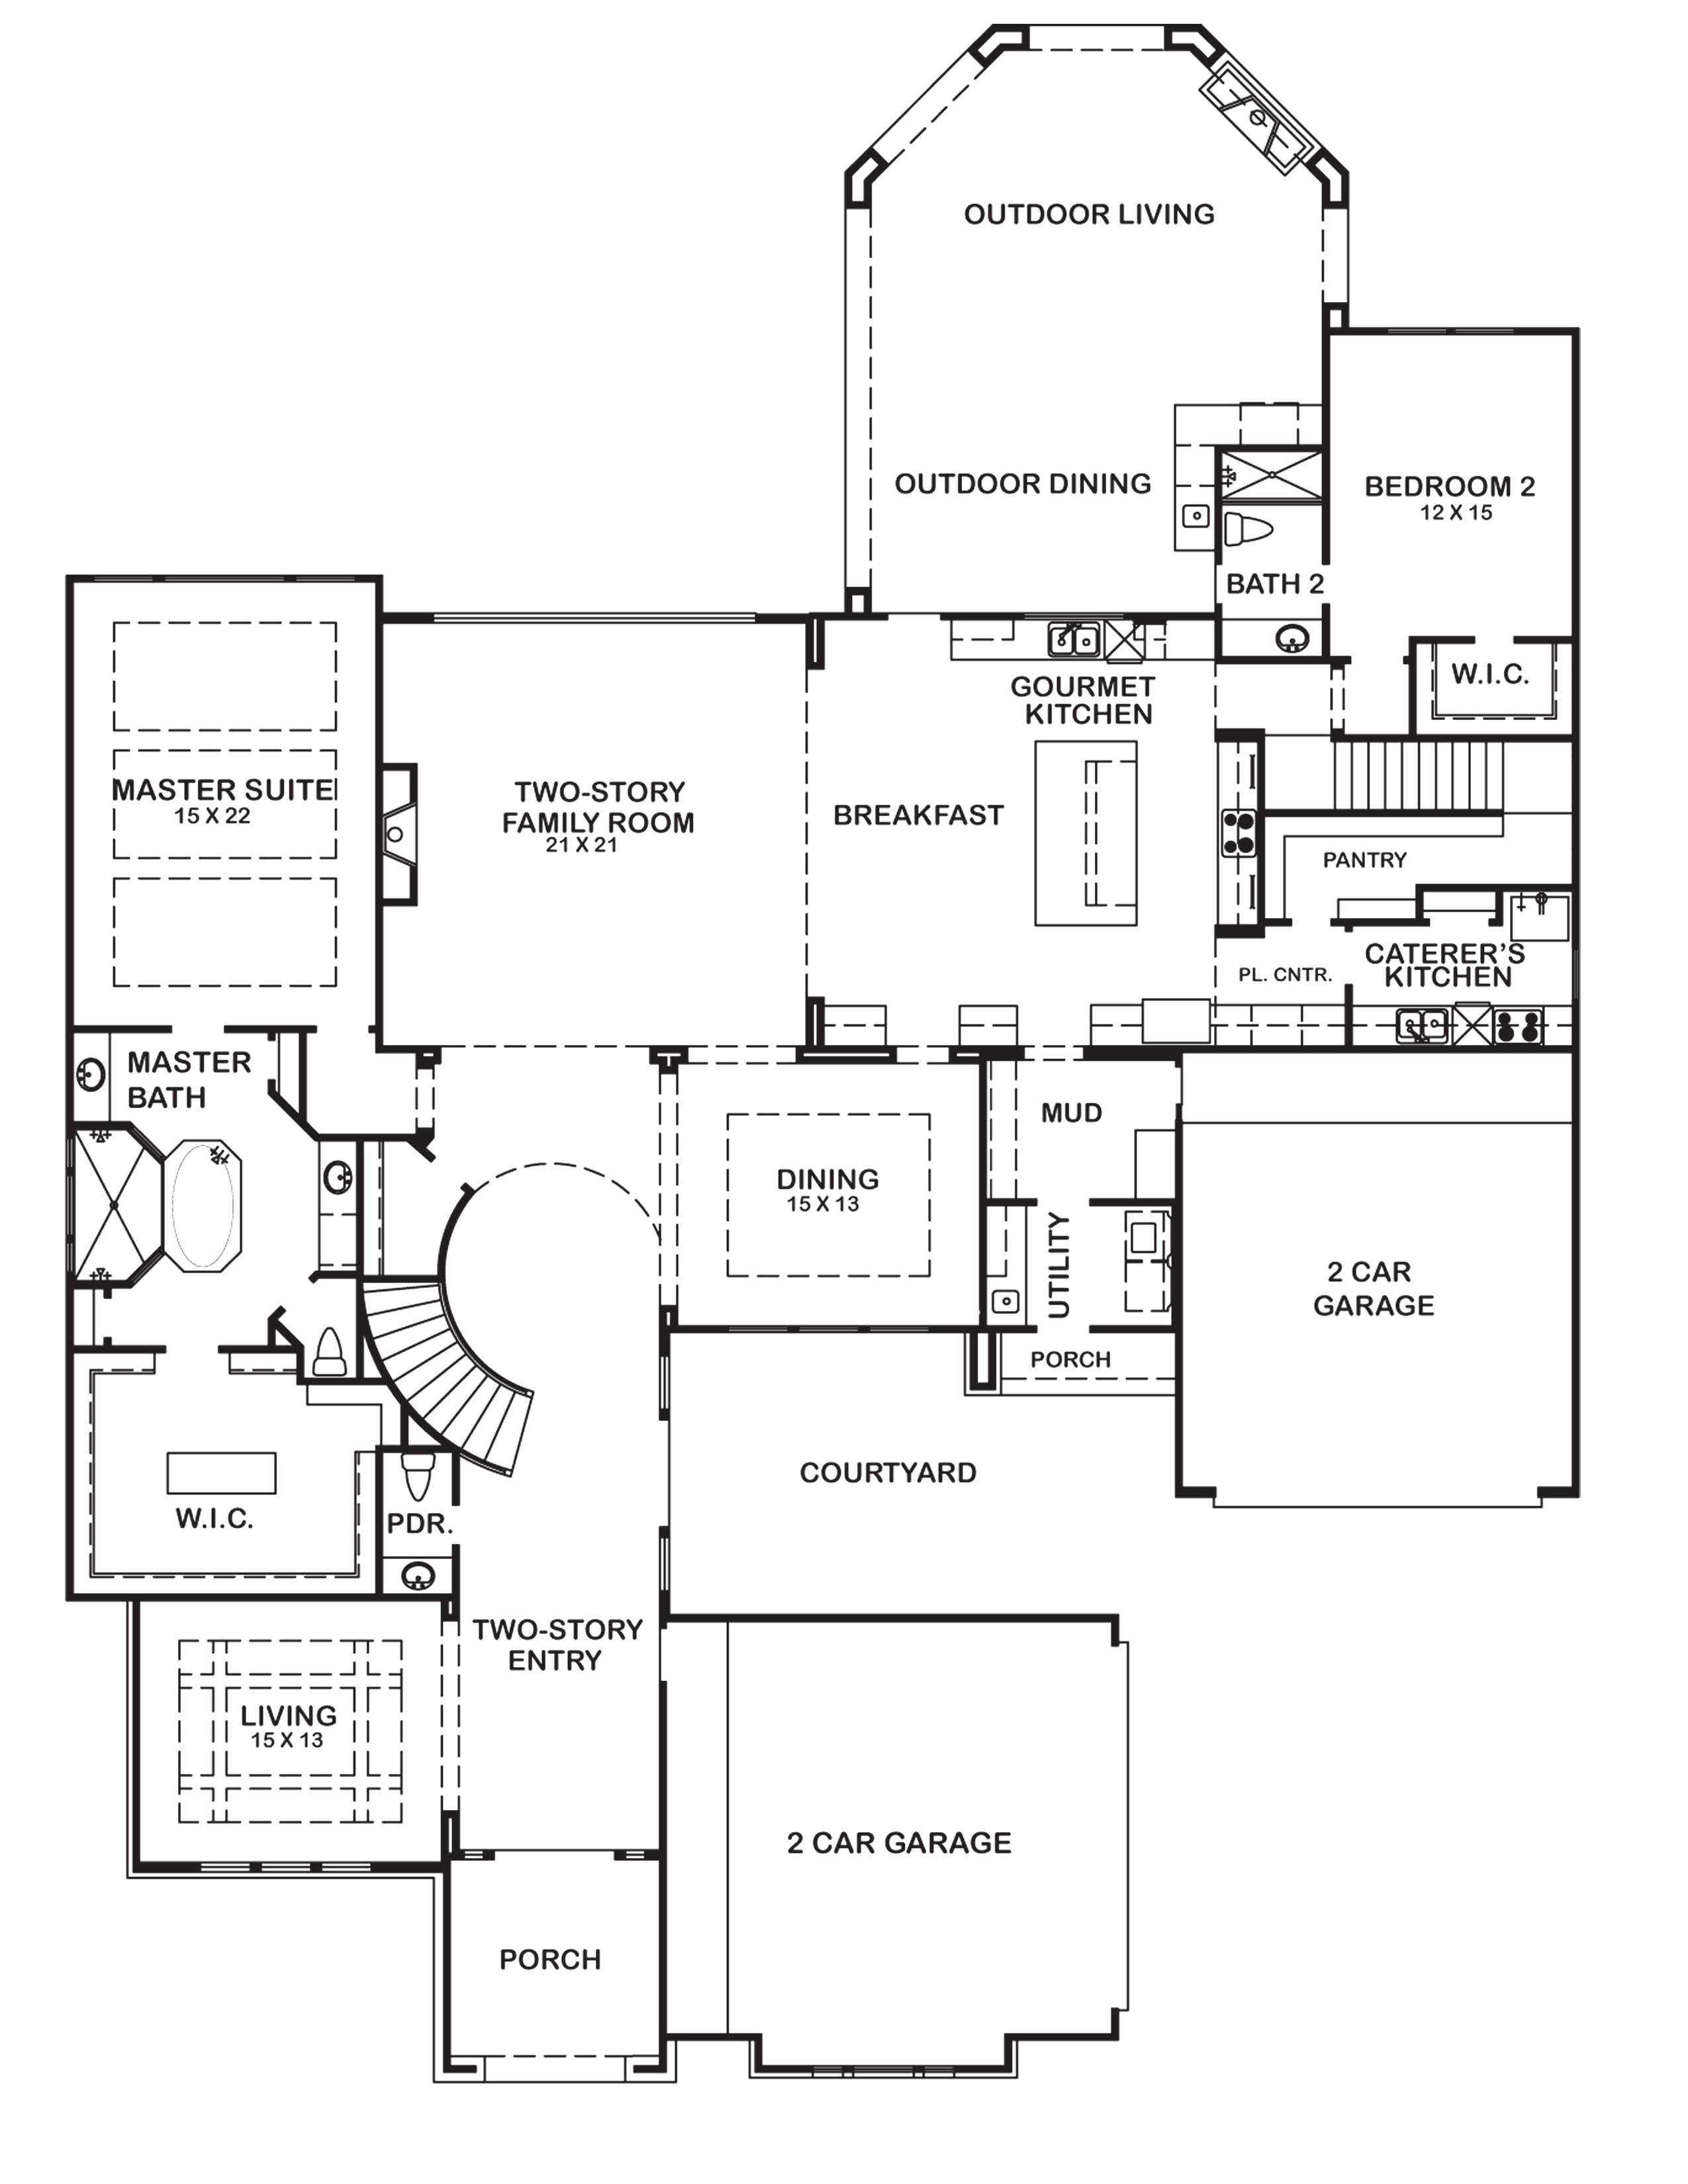 newmark homes mayfield floor plan